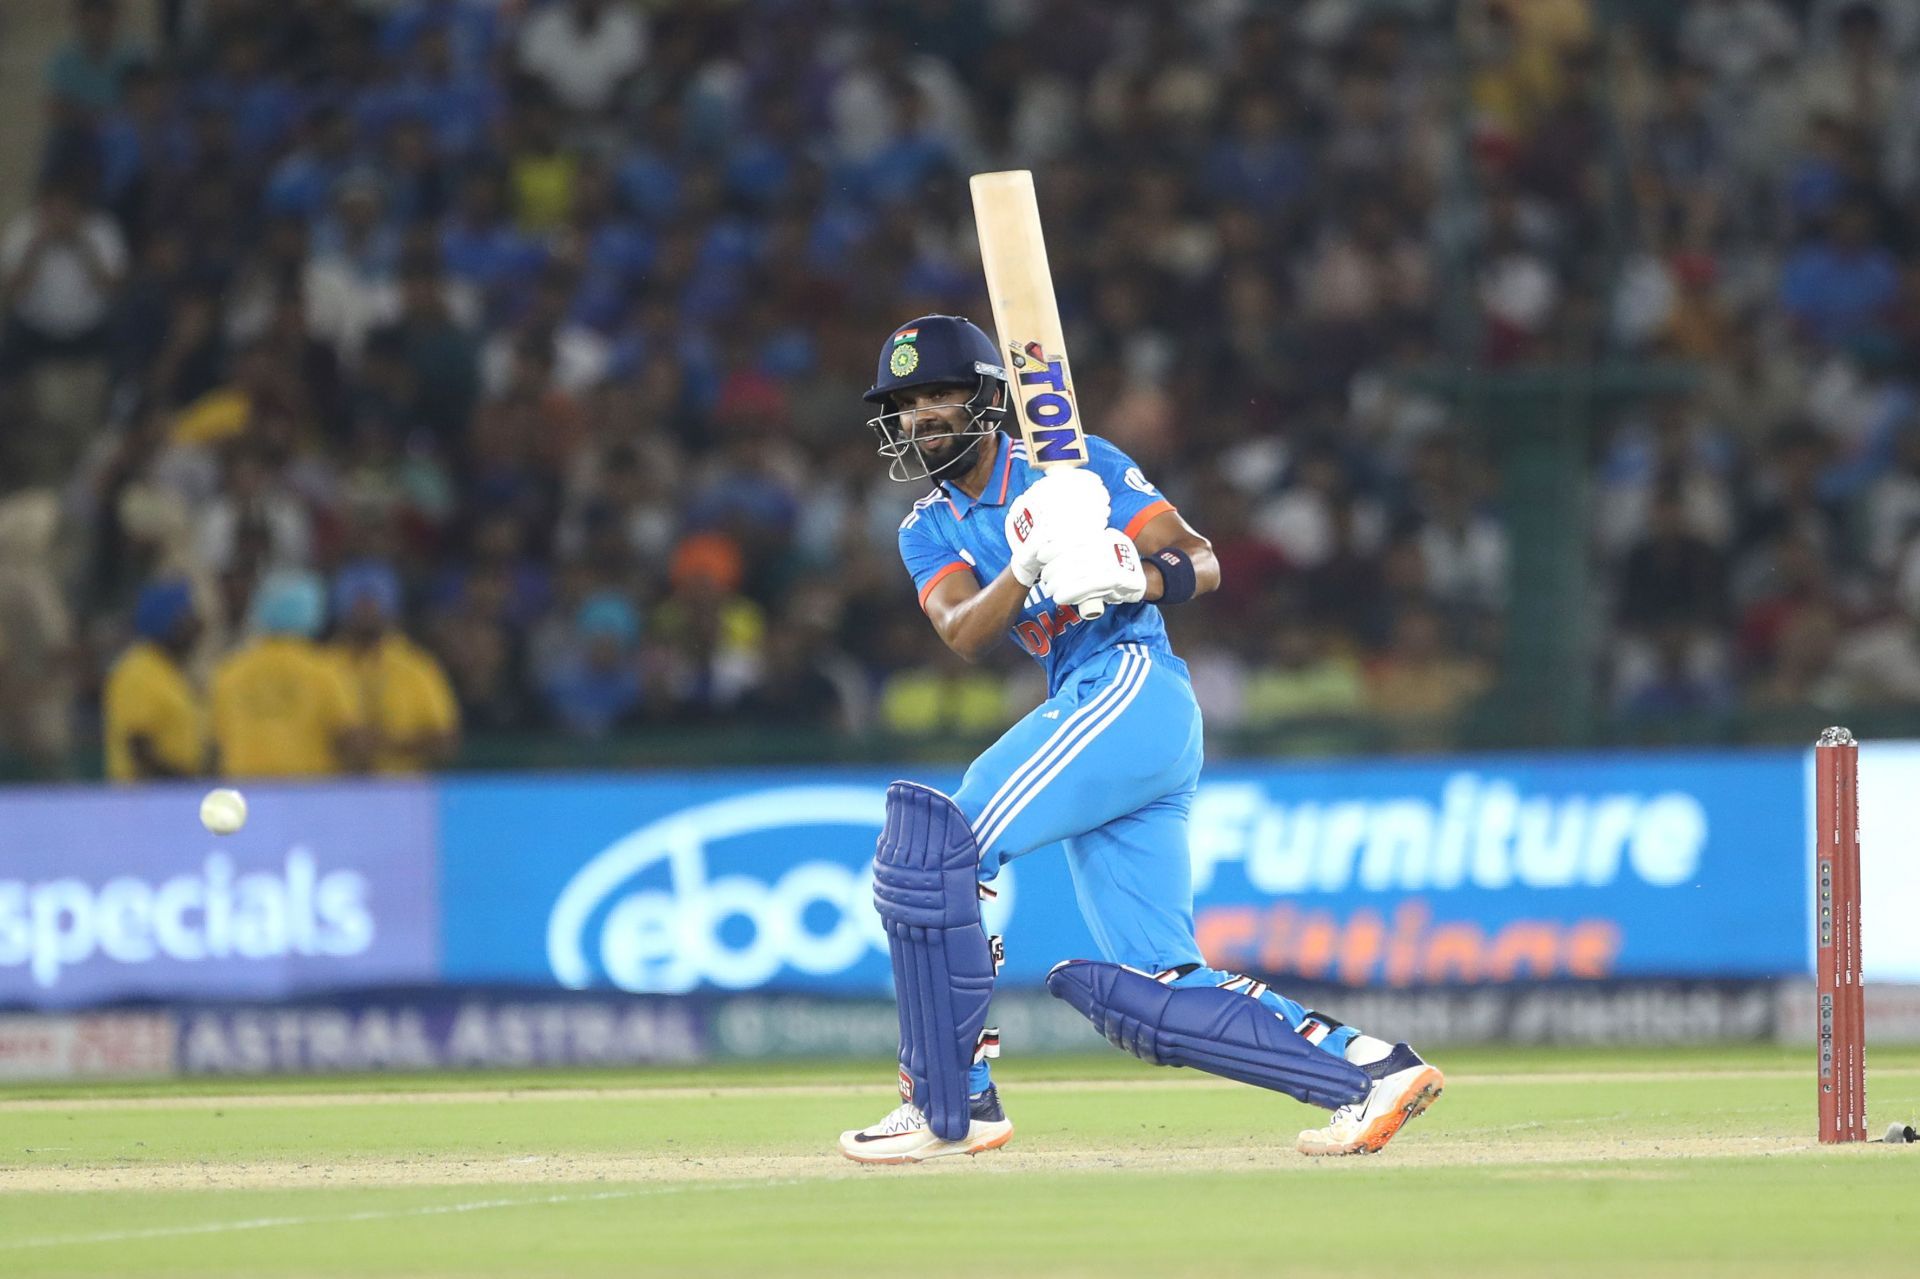 Ruturaj Gaikwad scored a century in the T20I series against Australia. [P/C: Getty]